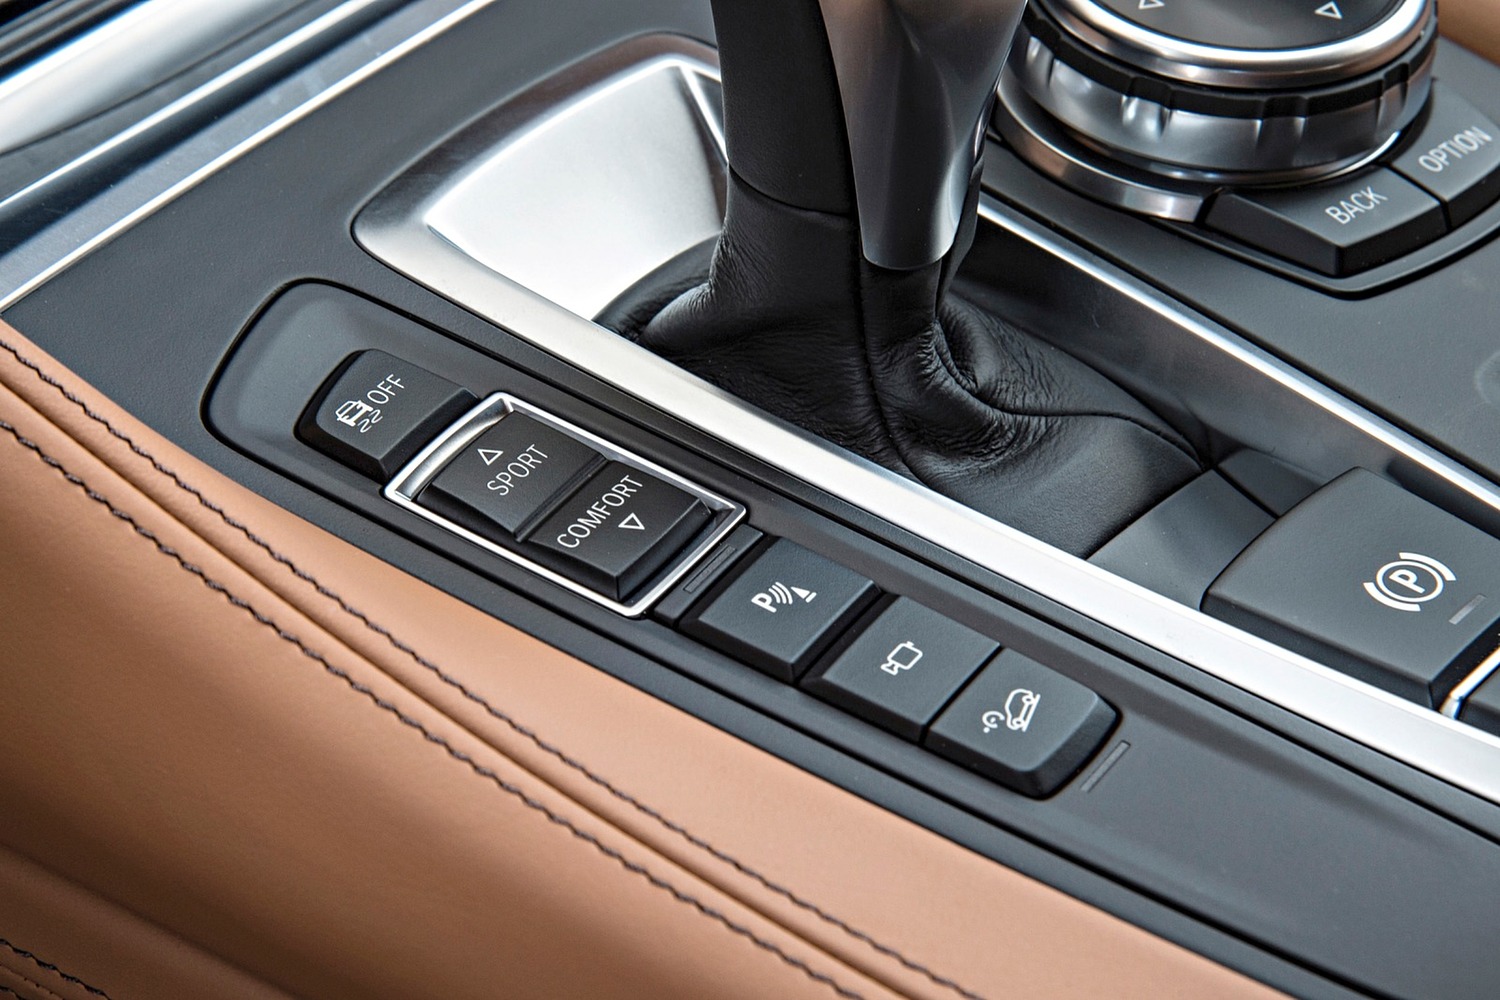 BMW X6 xDrive50i 4dr SUV Interior Detail (2016 model year shown)